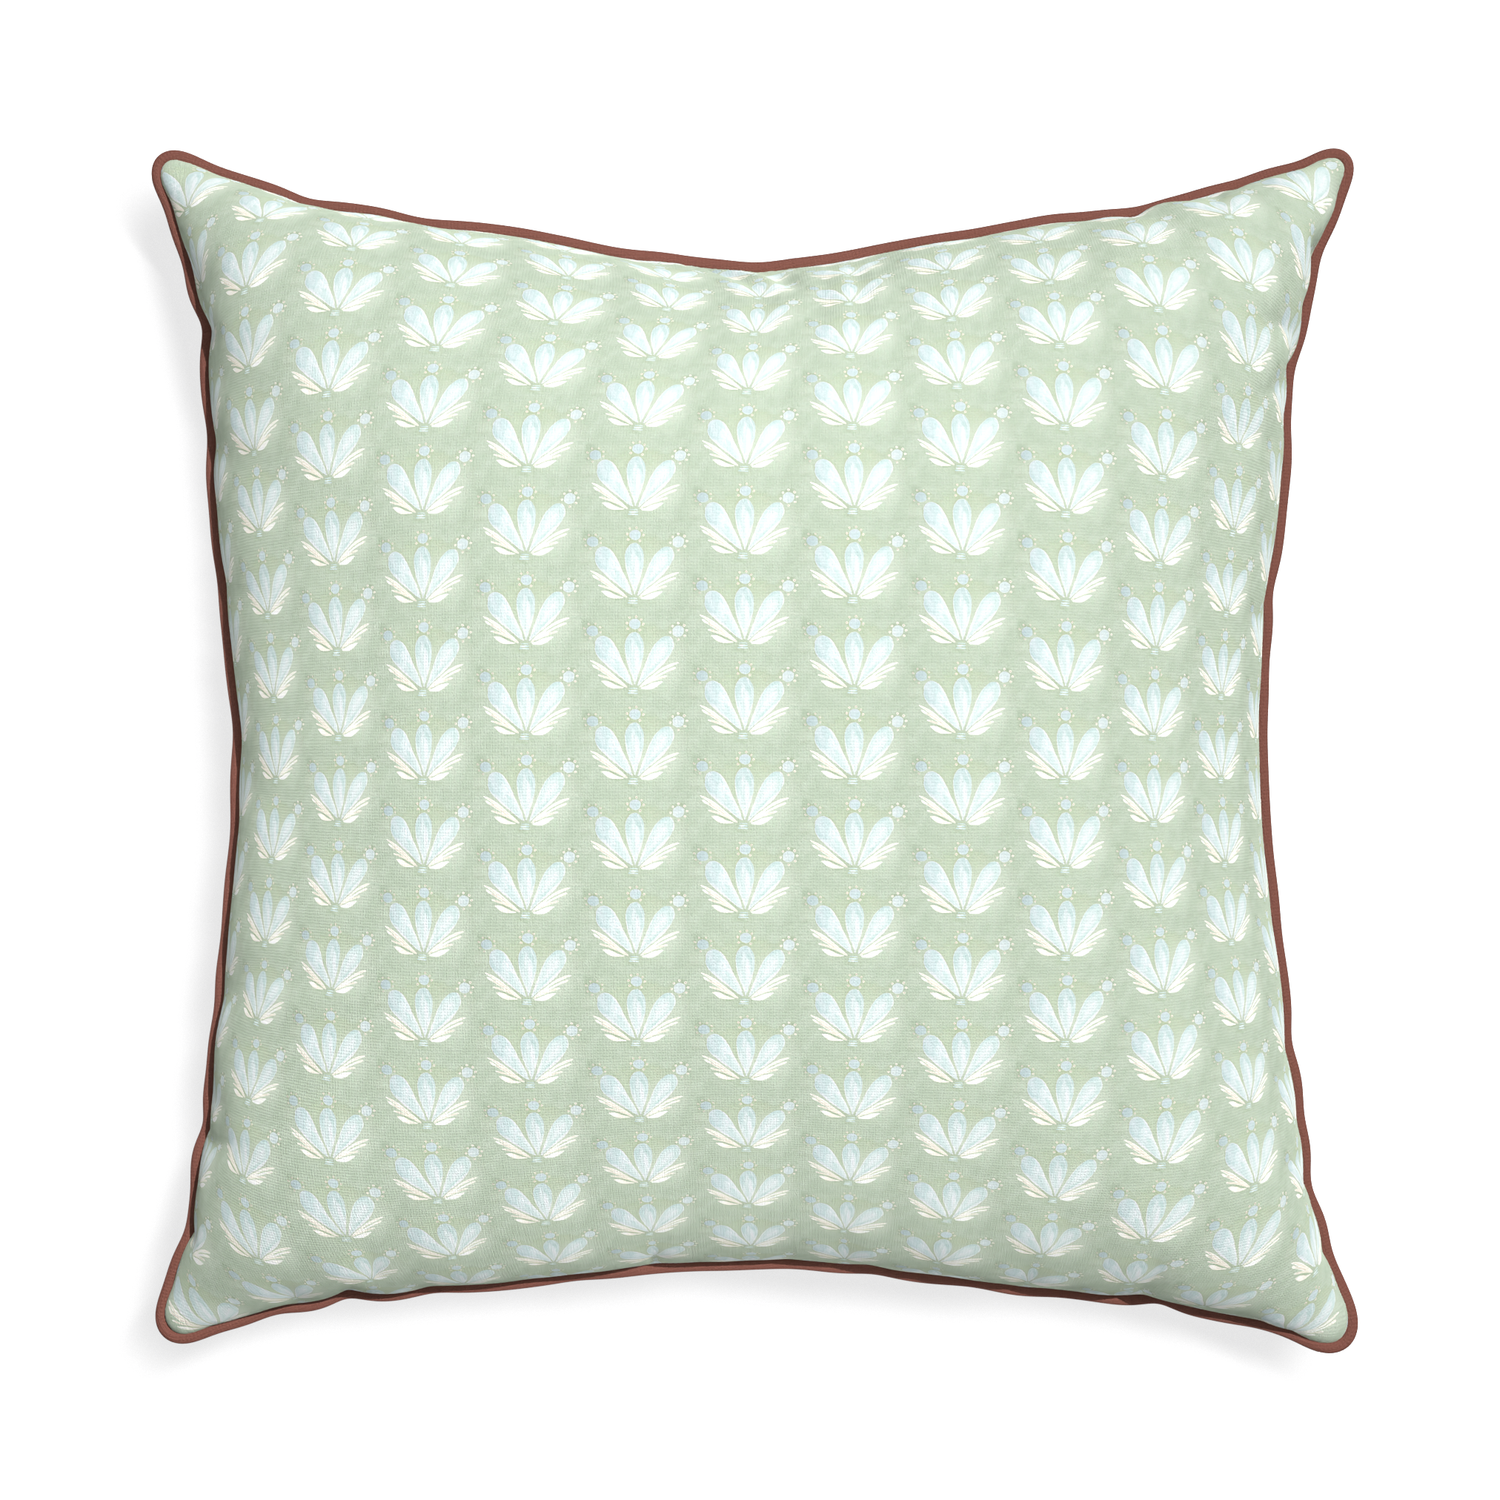 Euro-sham serena sea salt custom pillow with w piping on white background